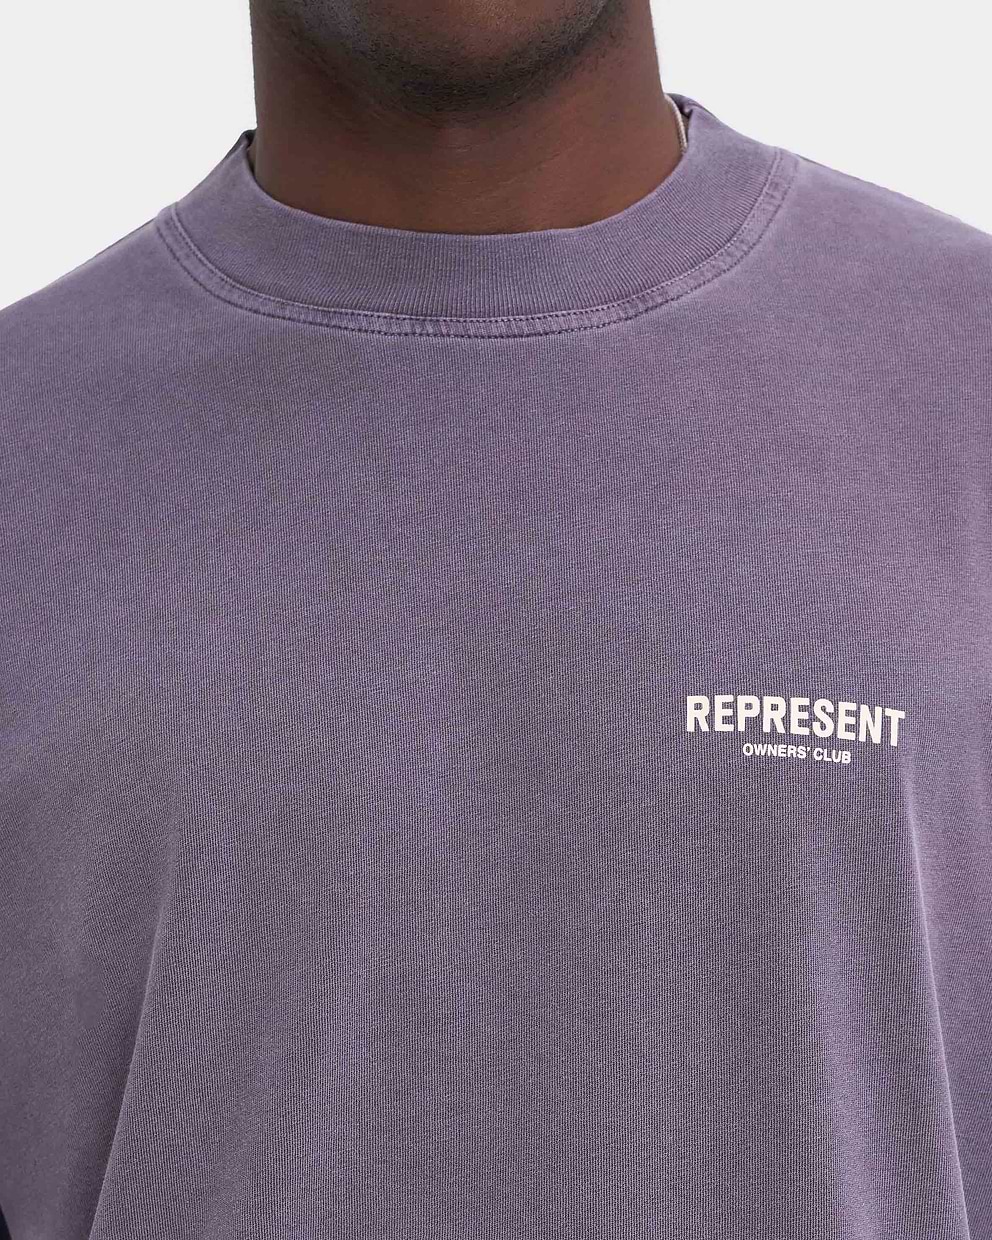 Represent Owners Club T-Shirt - Vintage Violet